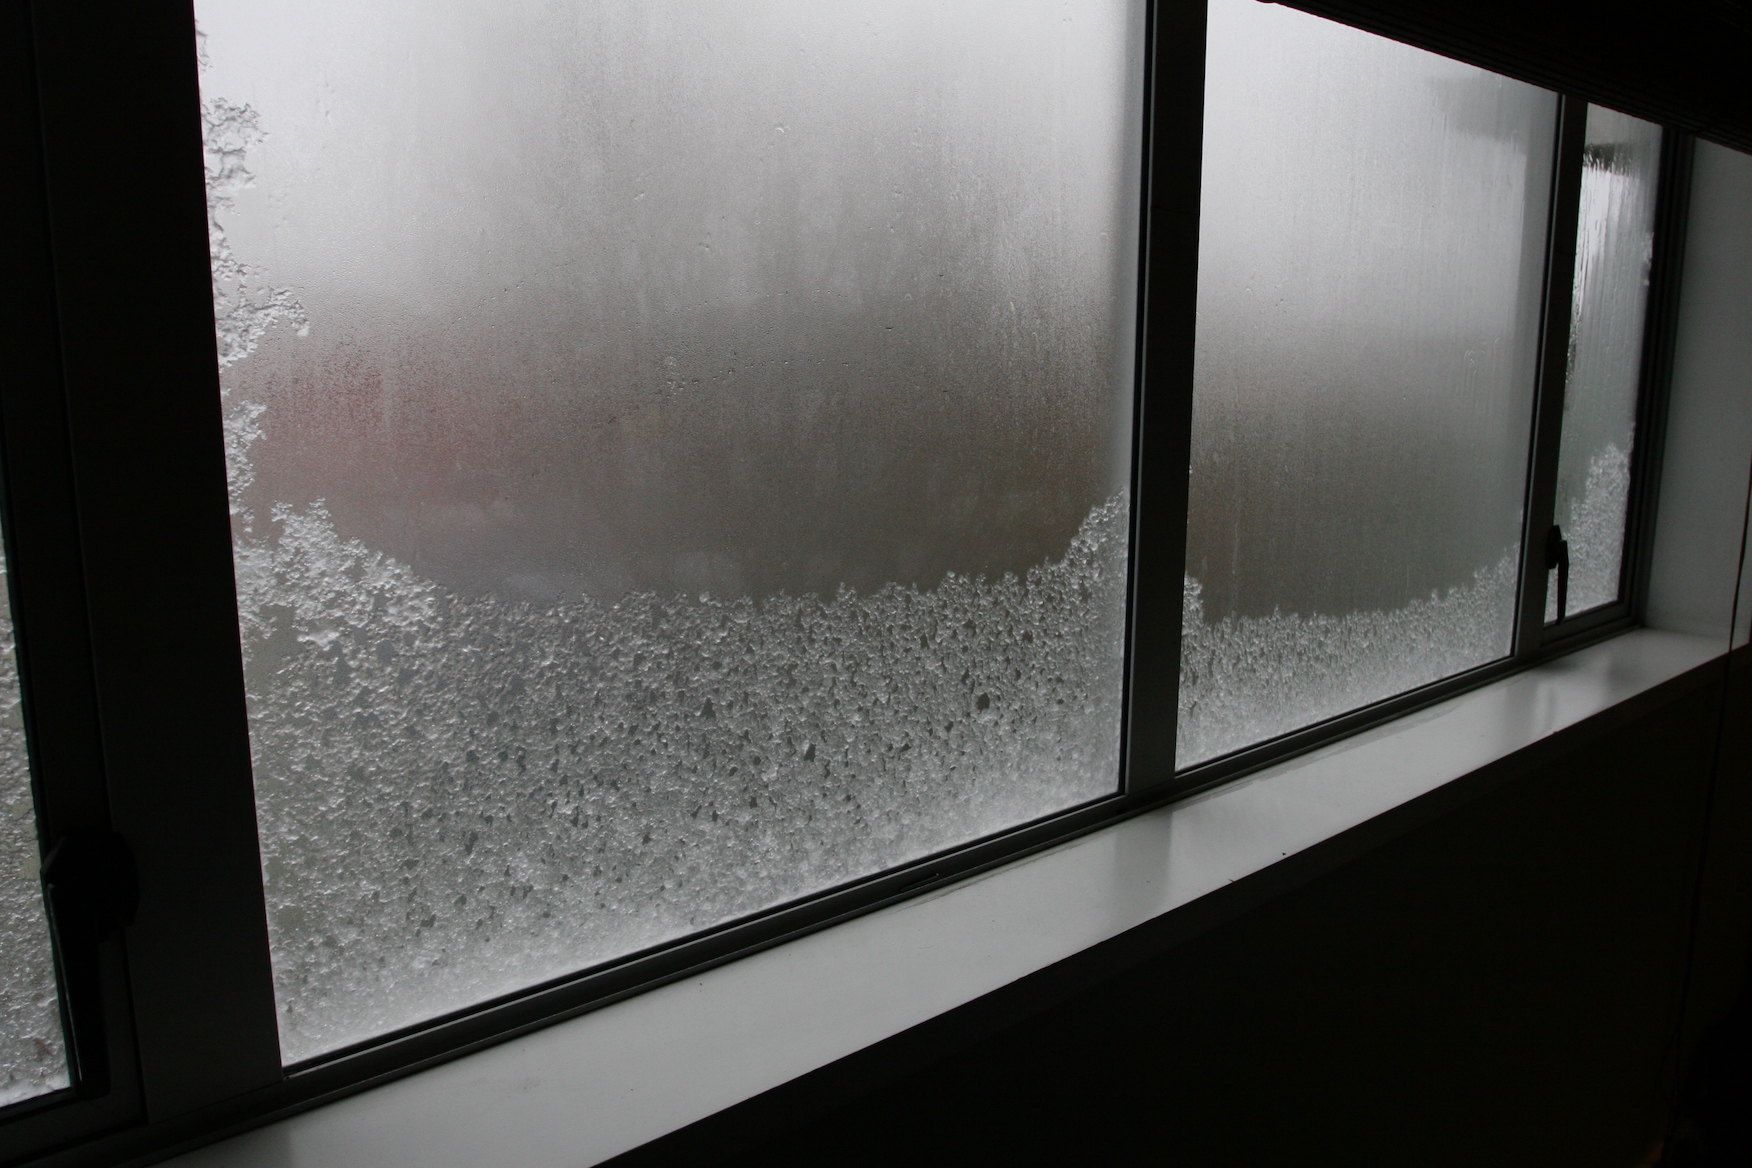 Ice on the window